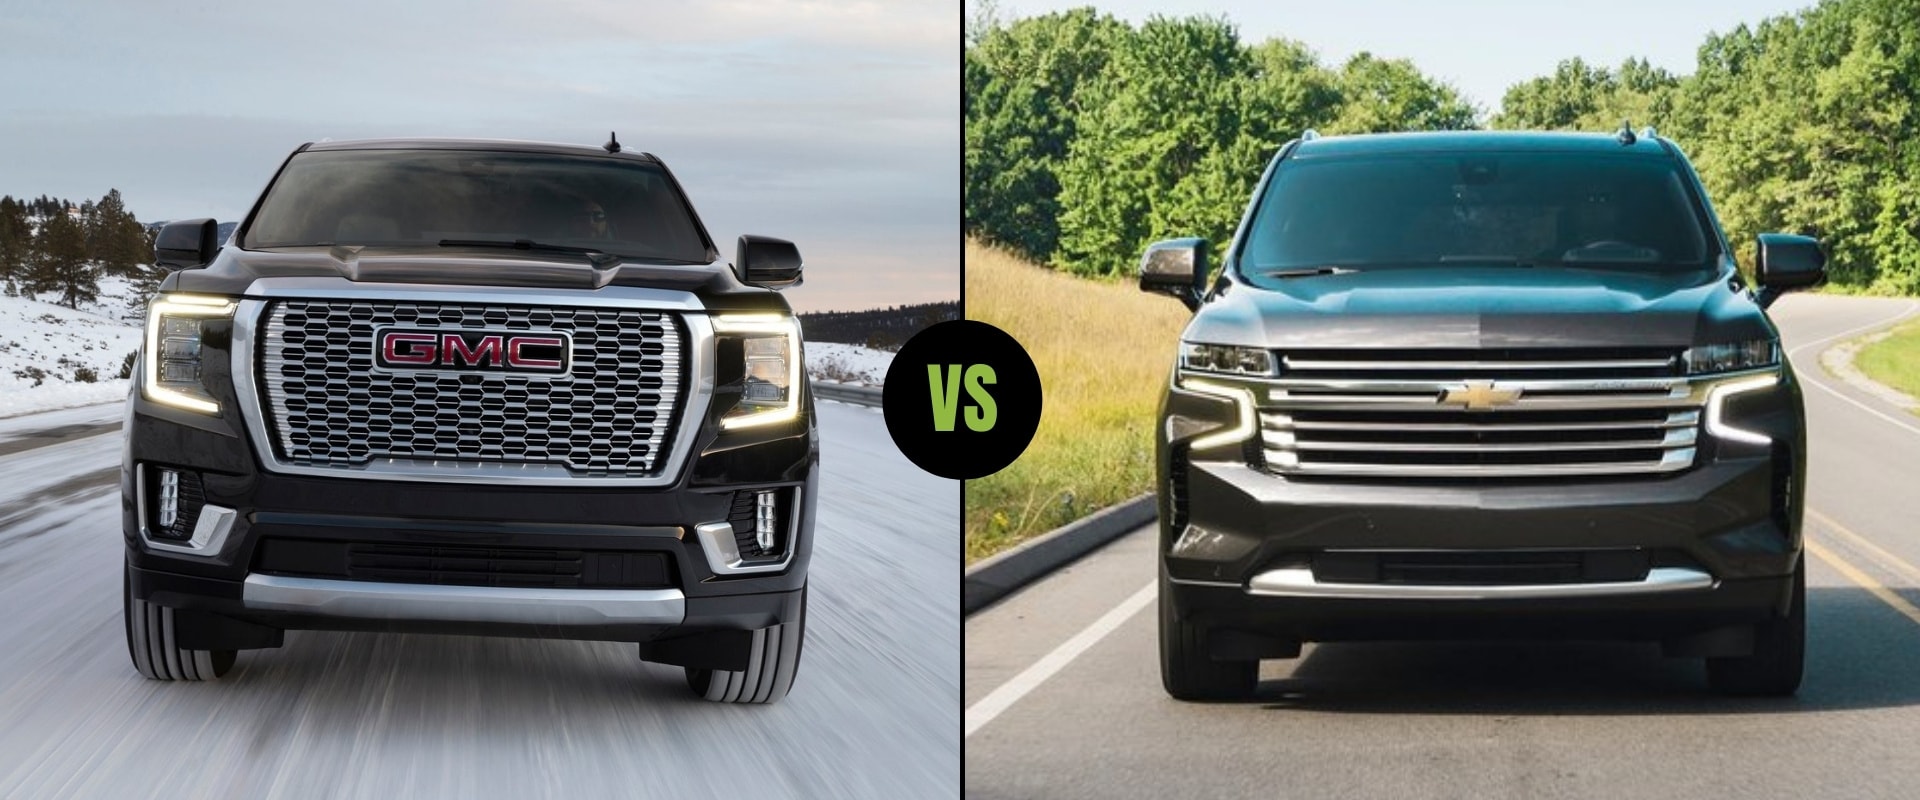 2022 GMC Yukon vs. Chevy Tahoe - The Full-Size SUV Comparison You